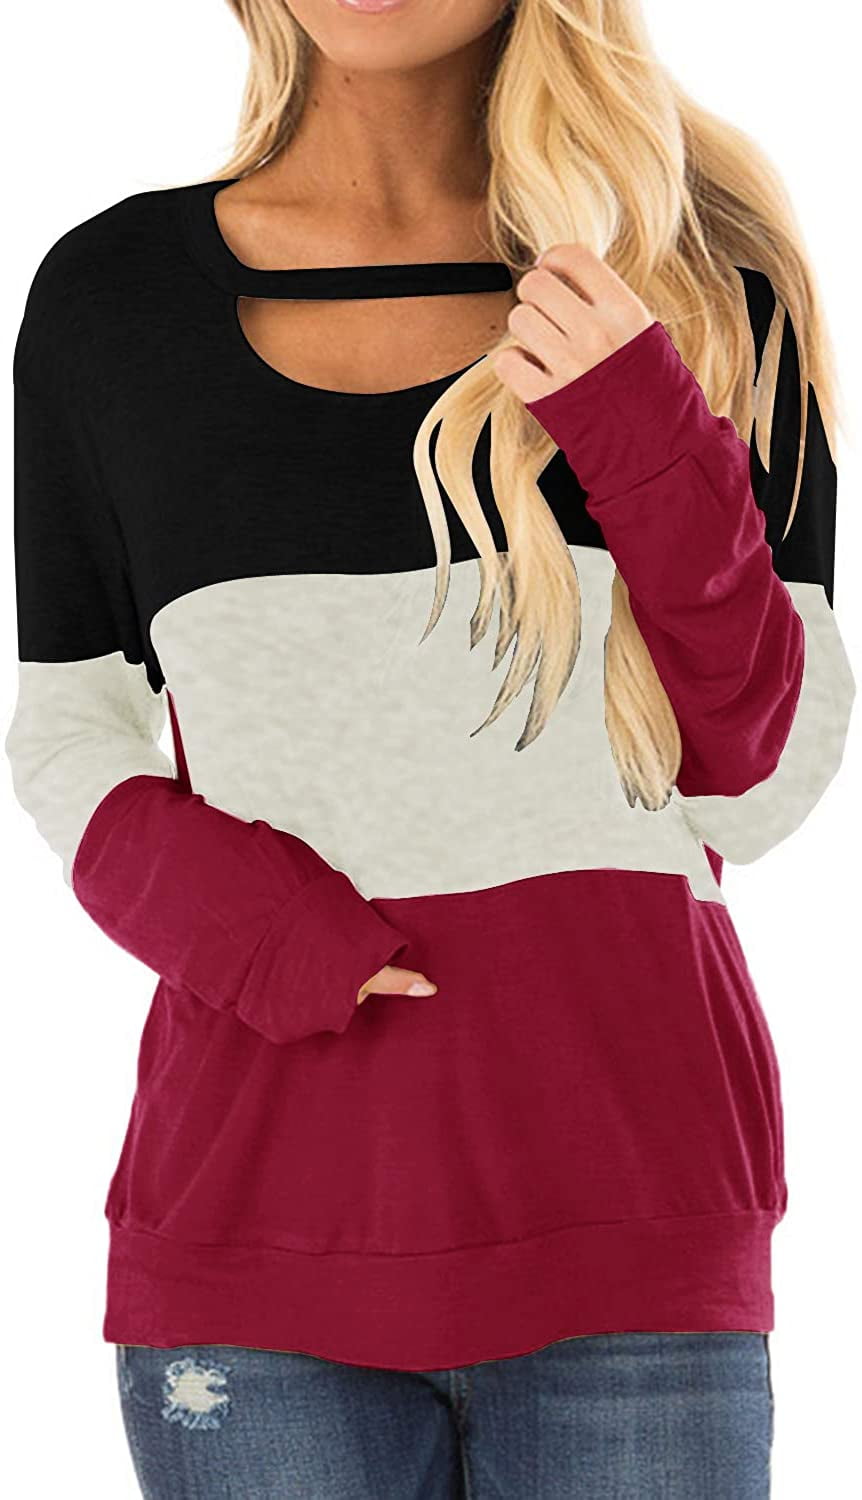 Topstype Women's Long Sleeve Tunics Color Block Cutout Sweatshirt Loose Fit Tops